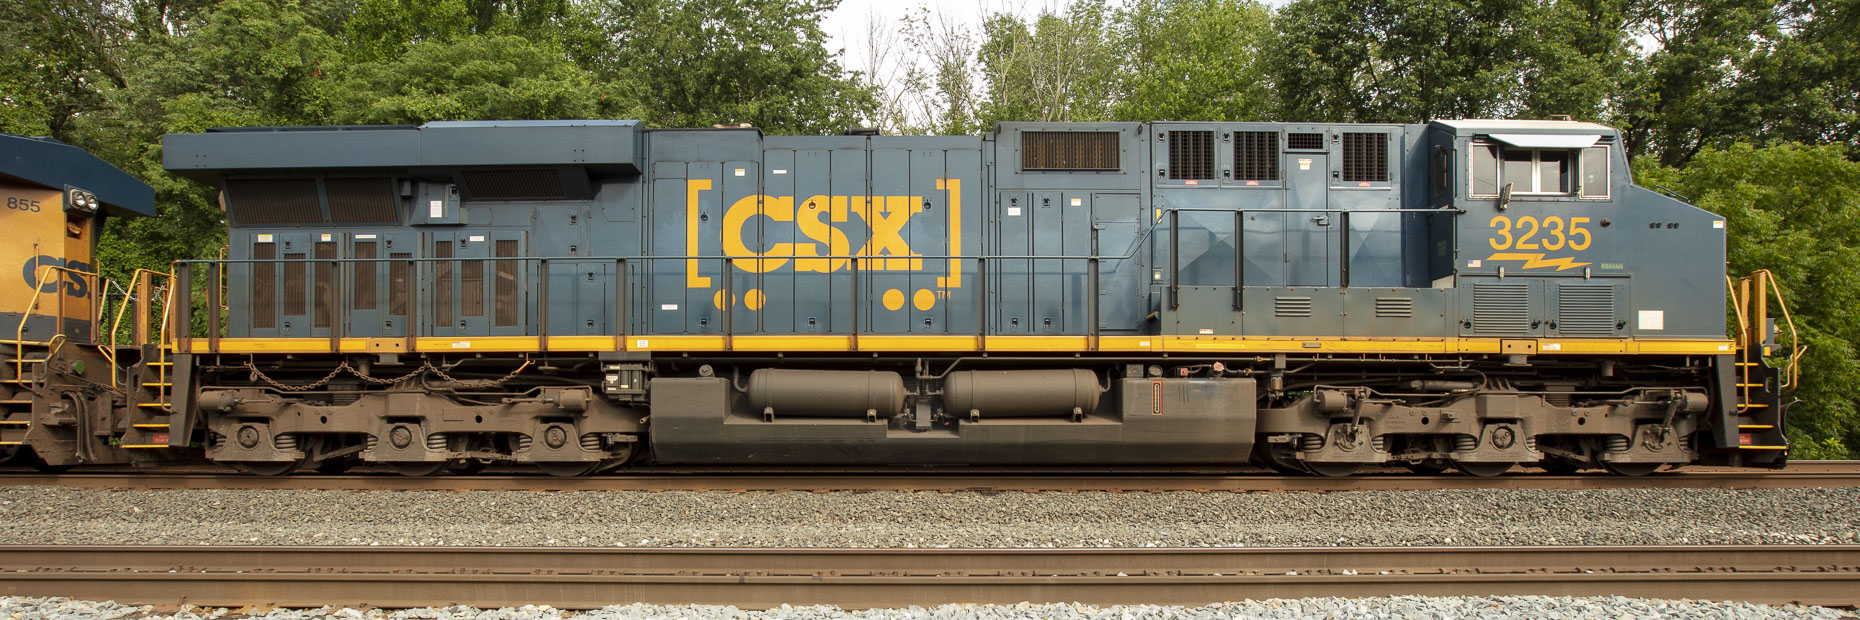 Locomotive CSX 3235